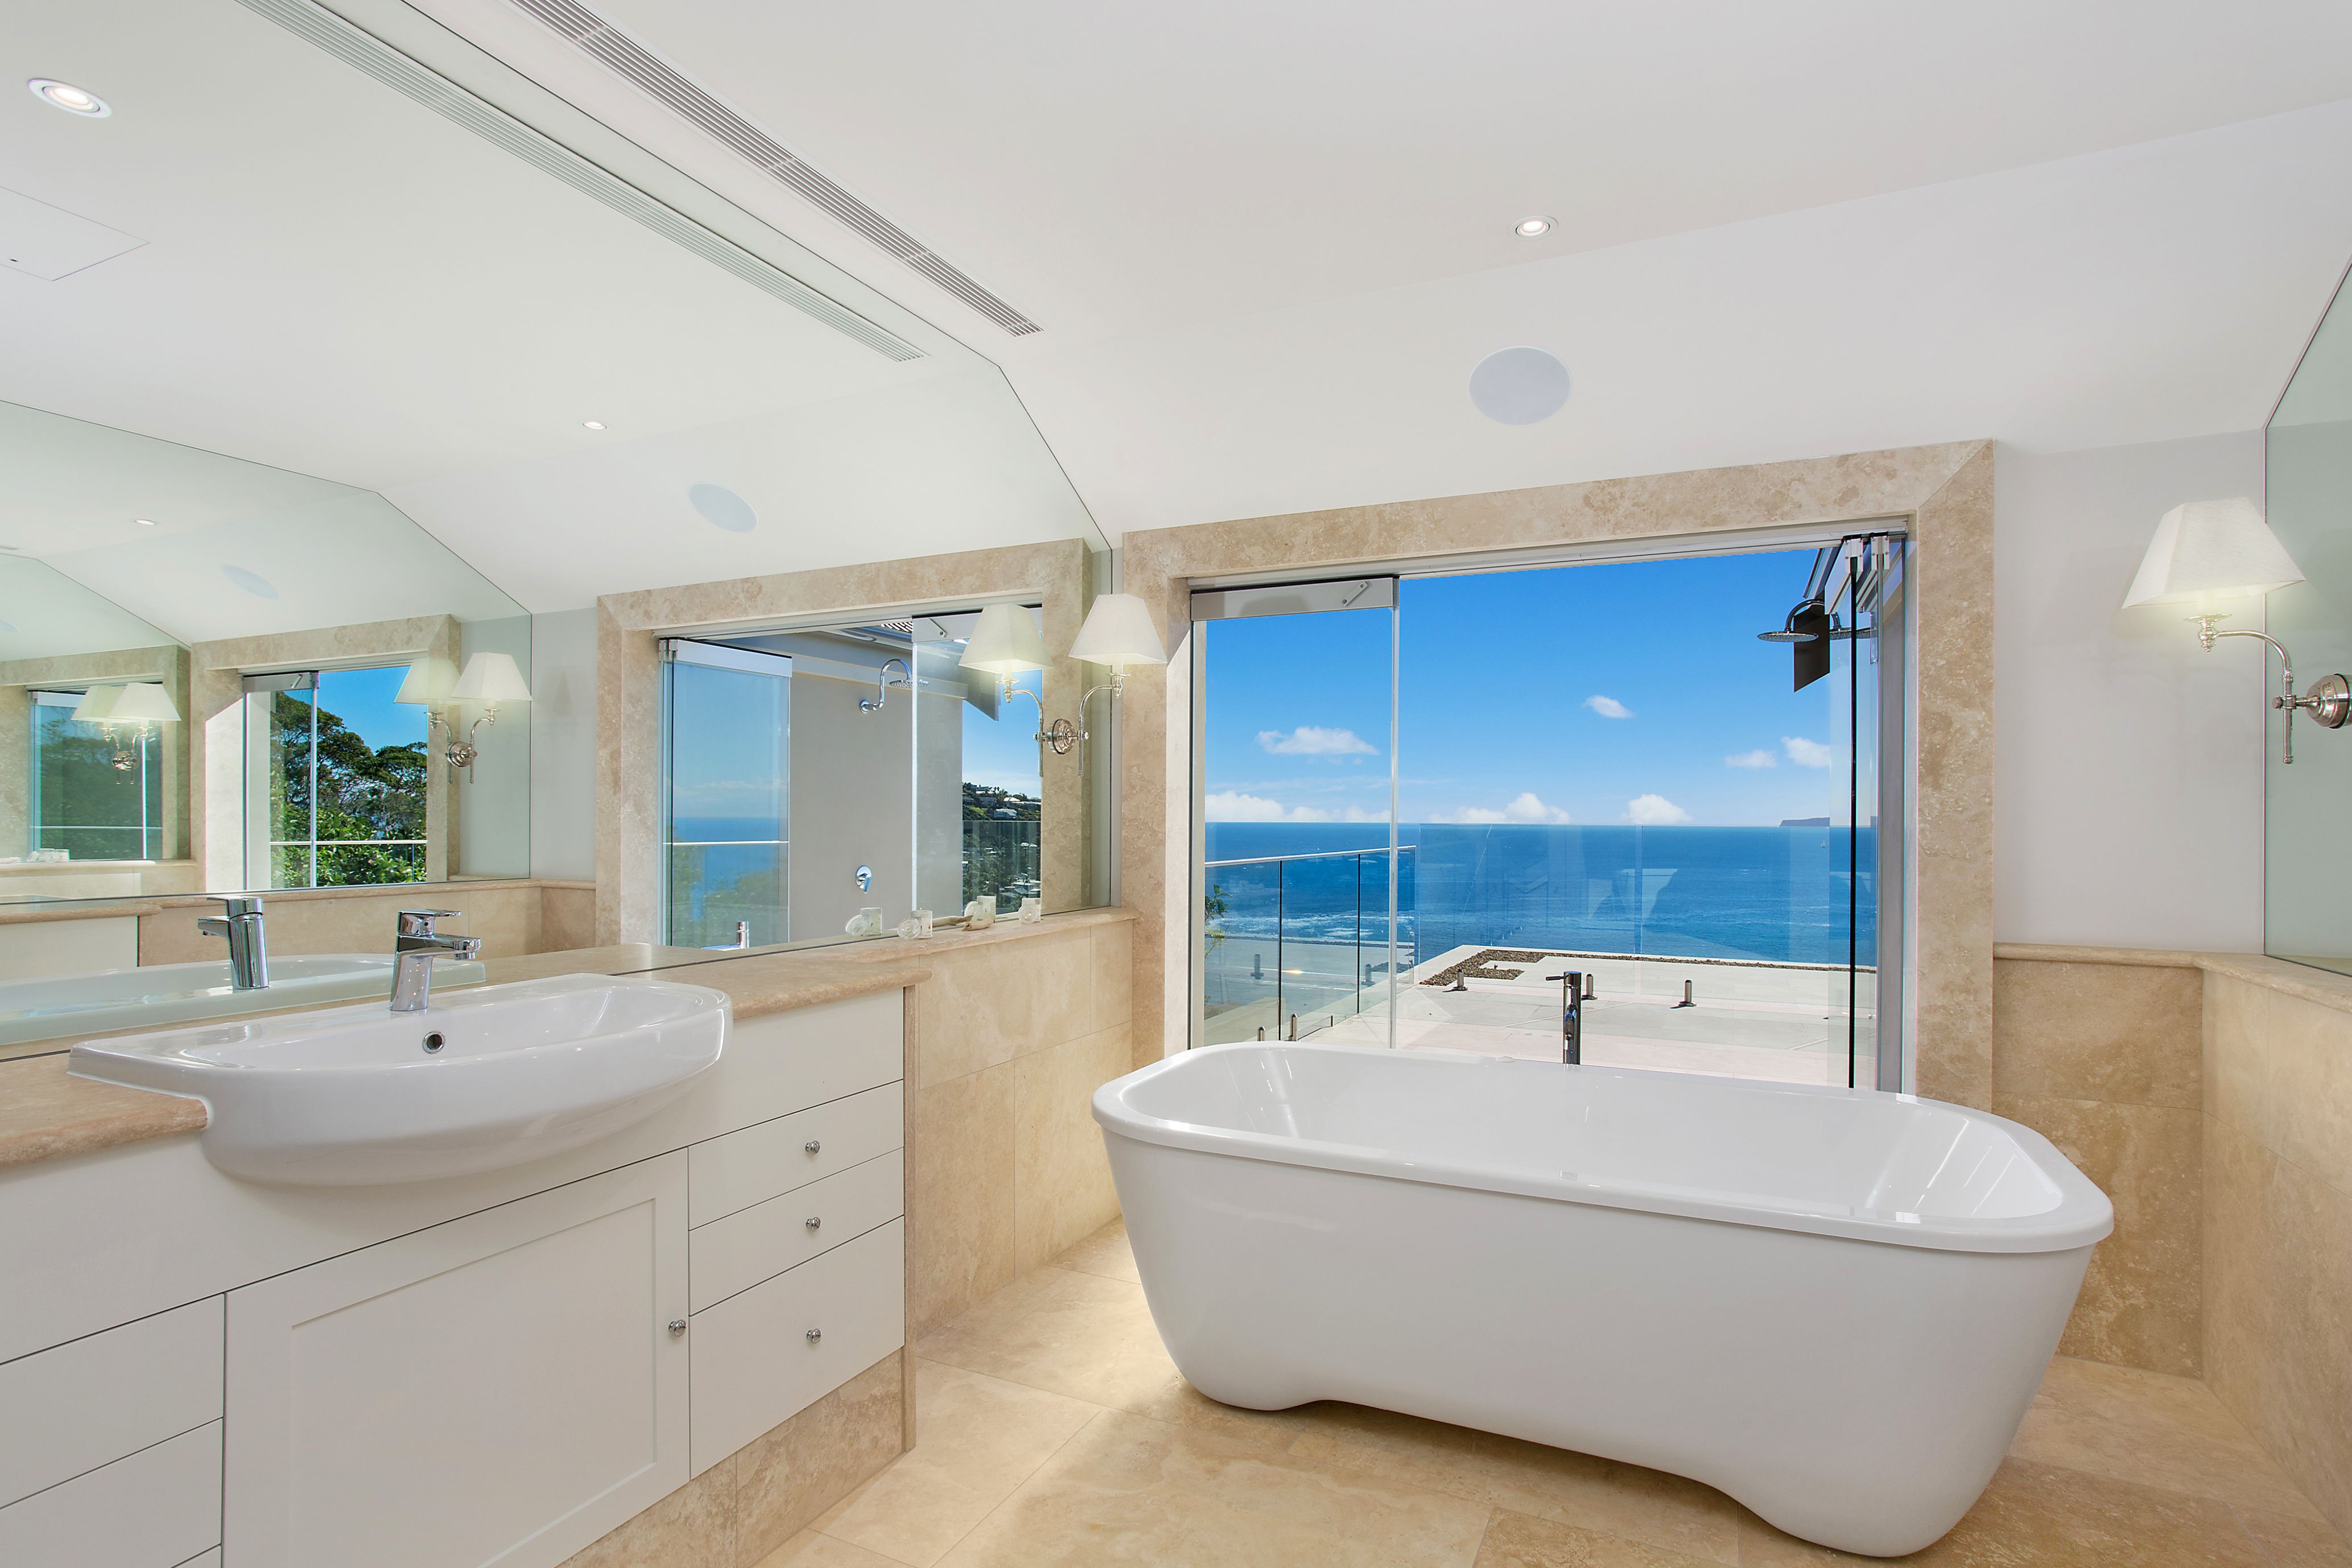 Stunning Beach Style Bathroom Designs